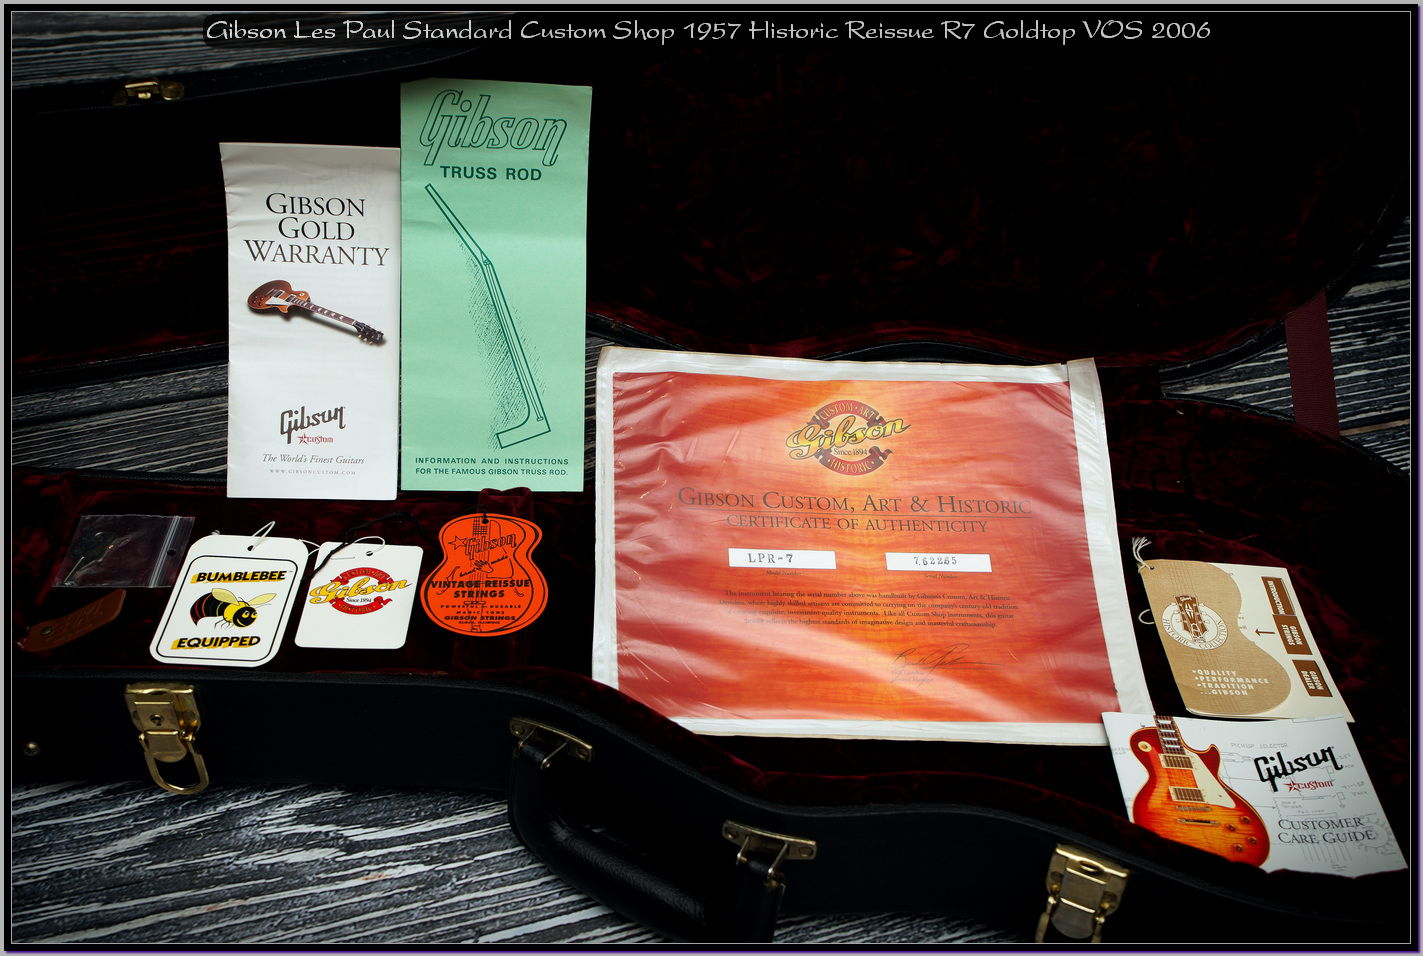 Gibson Les Paul Standard Custom Shop 1957 Historic Reissue R7 Goldtop VOS 2006 09_x1400.jpg